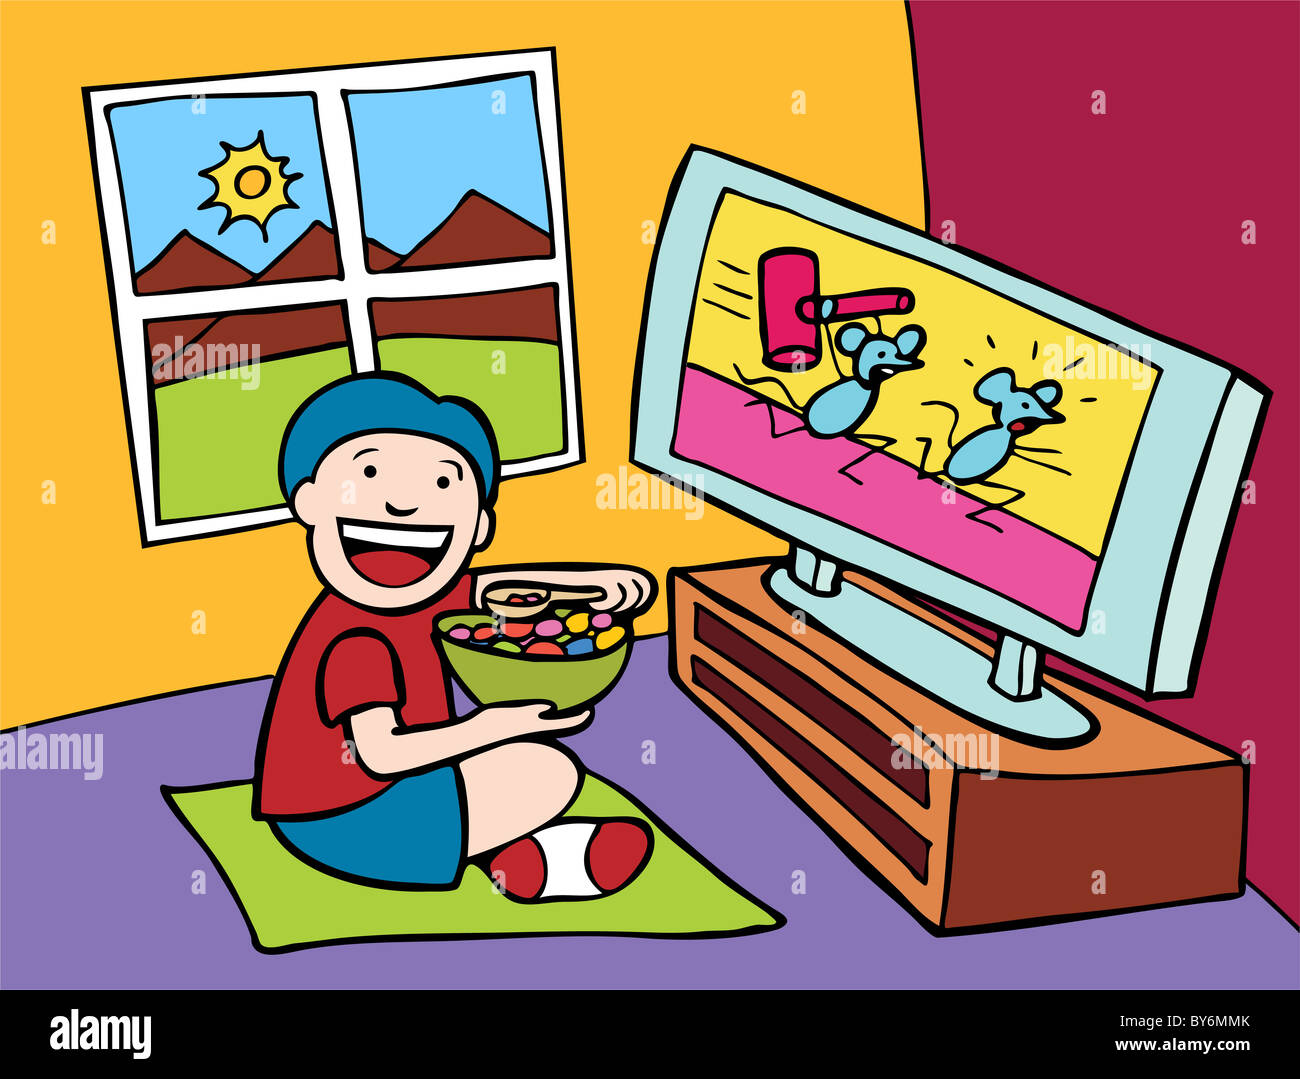 Cartoon of child watching television Stock Photo - Alamy